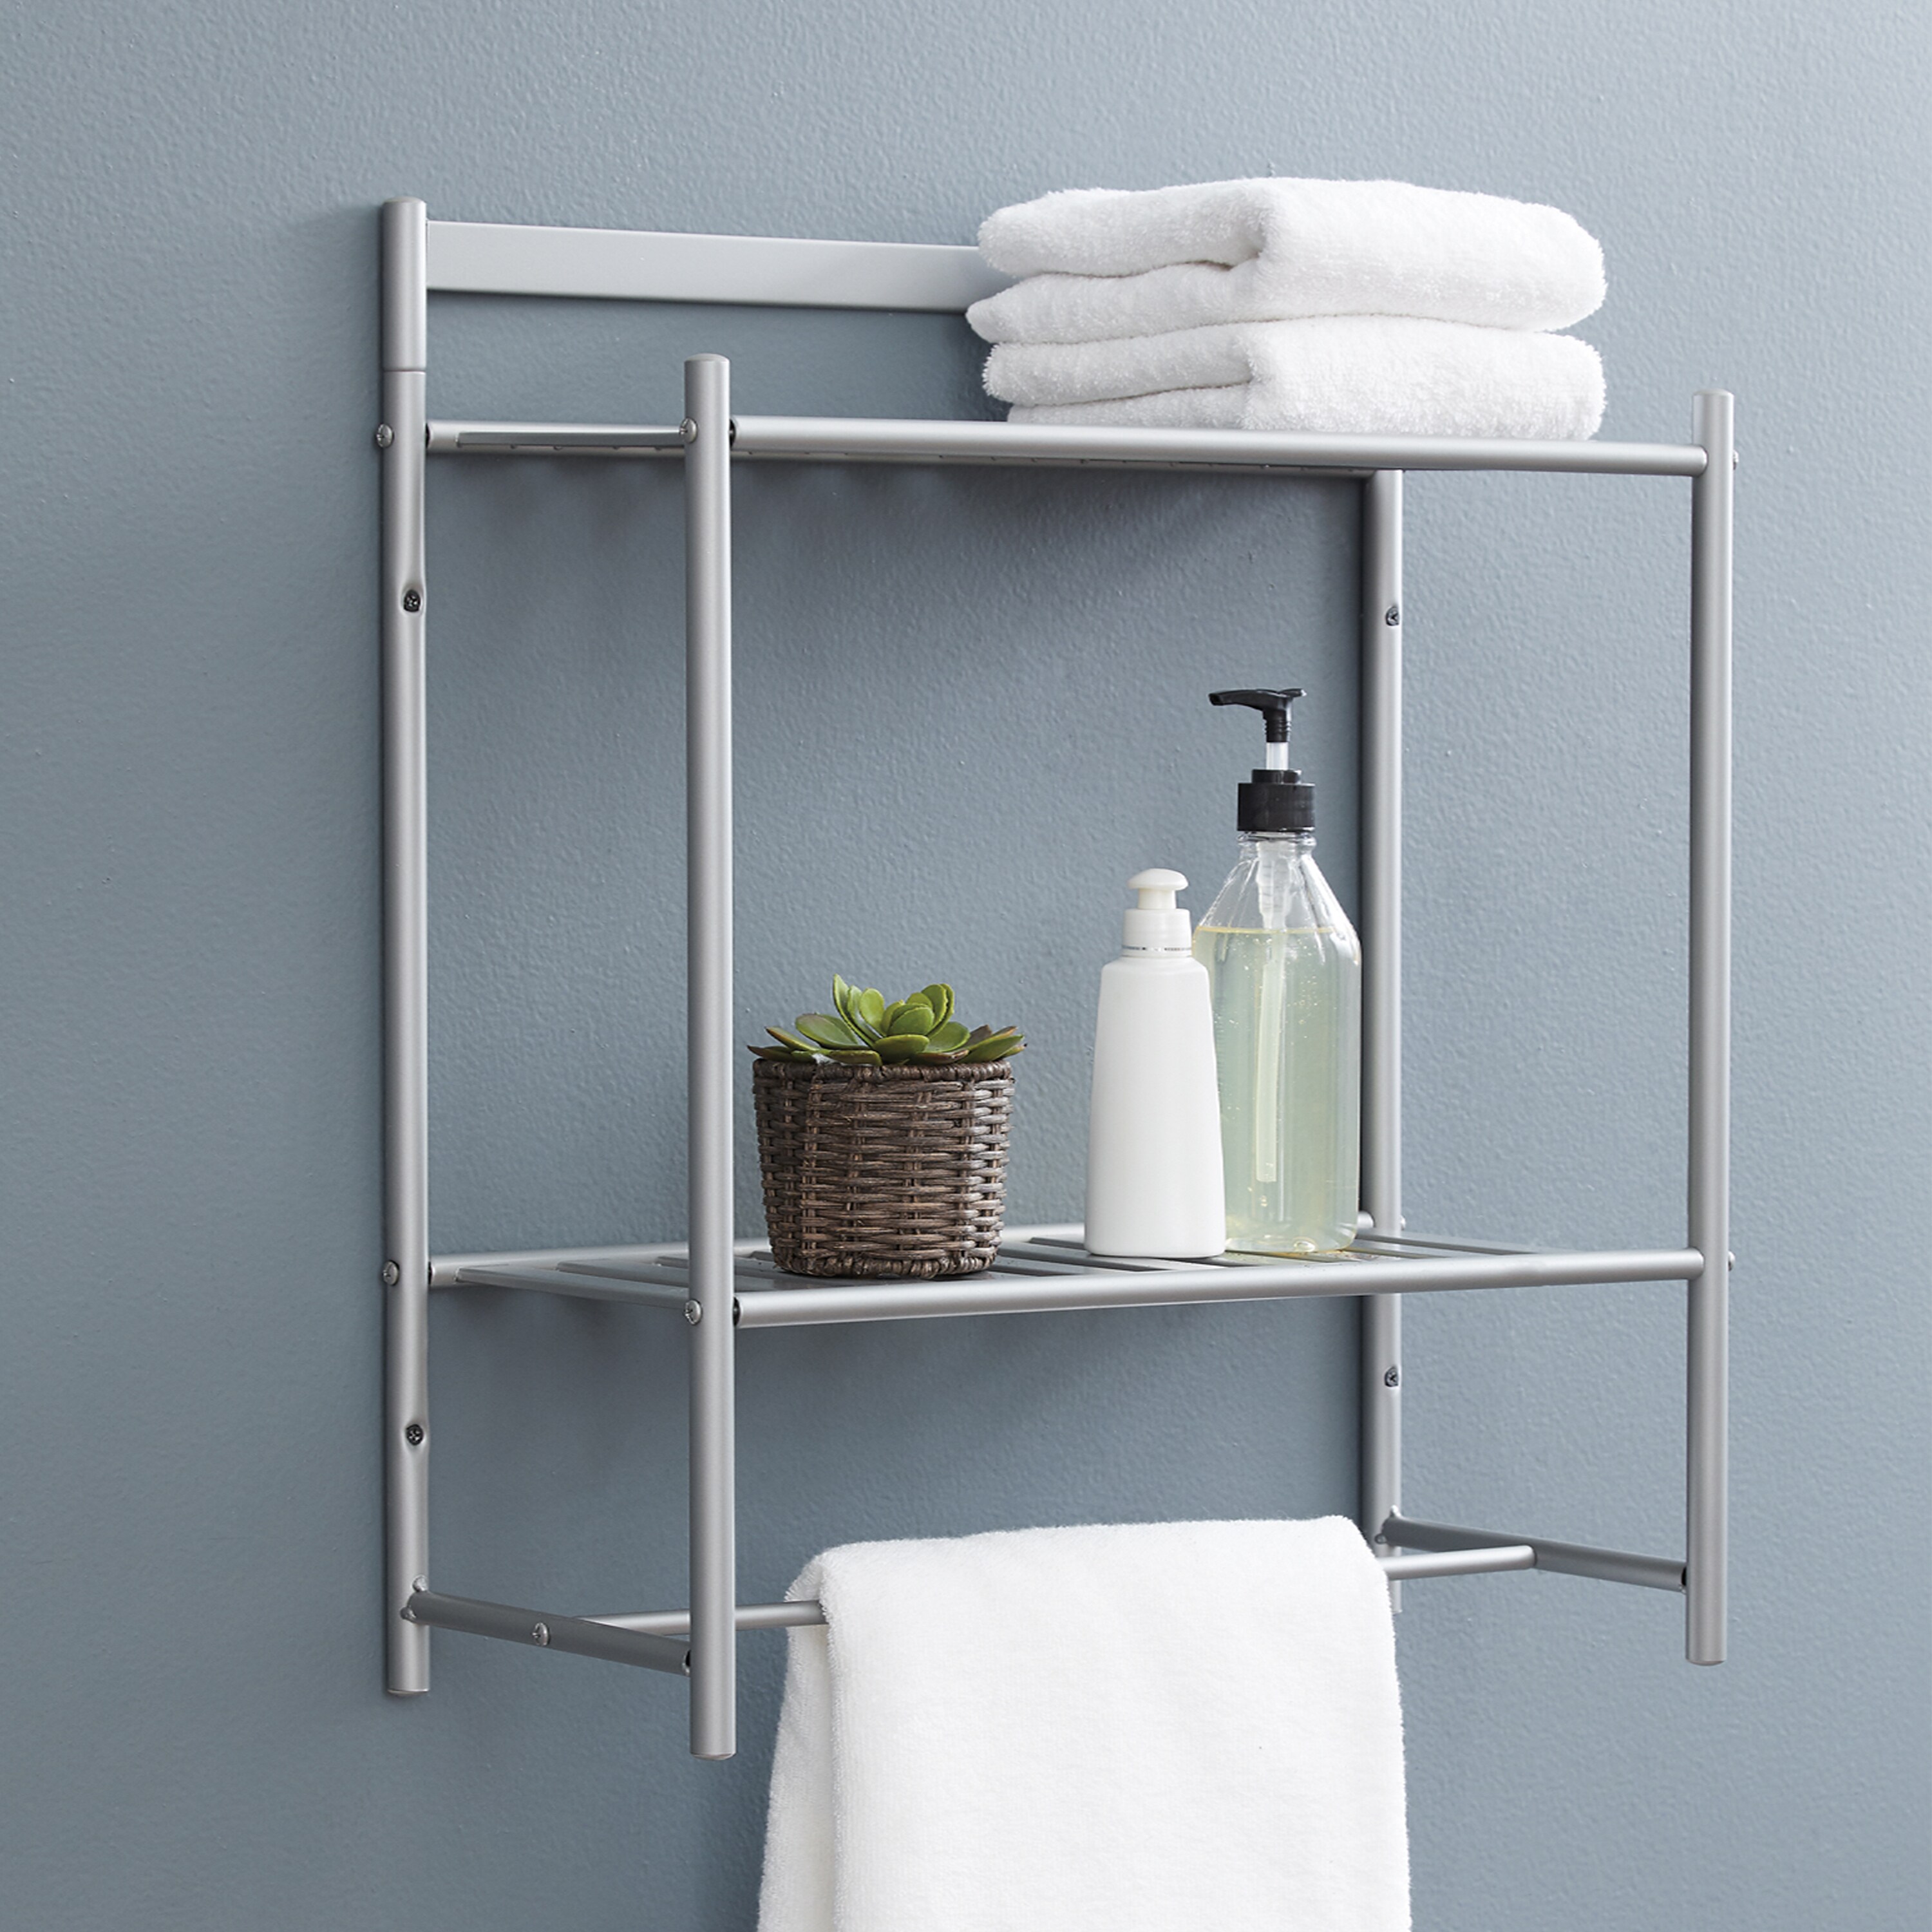 2 Tier Stainless Steel Storage Shelf Bathroom Accessories Fitting